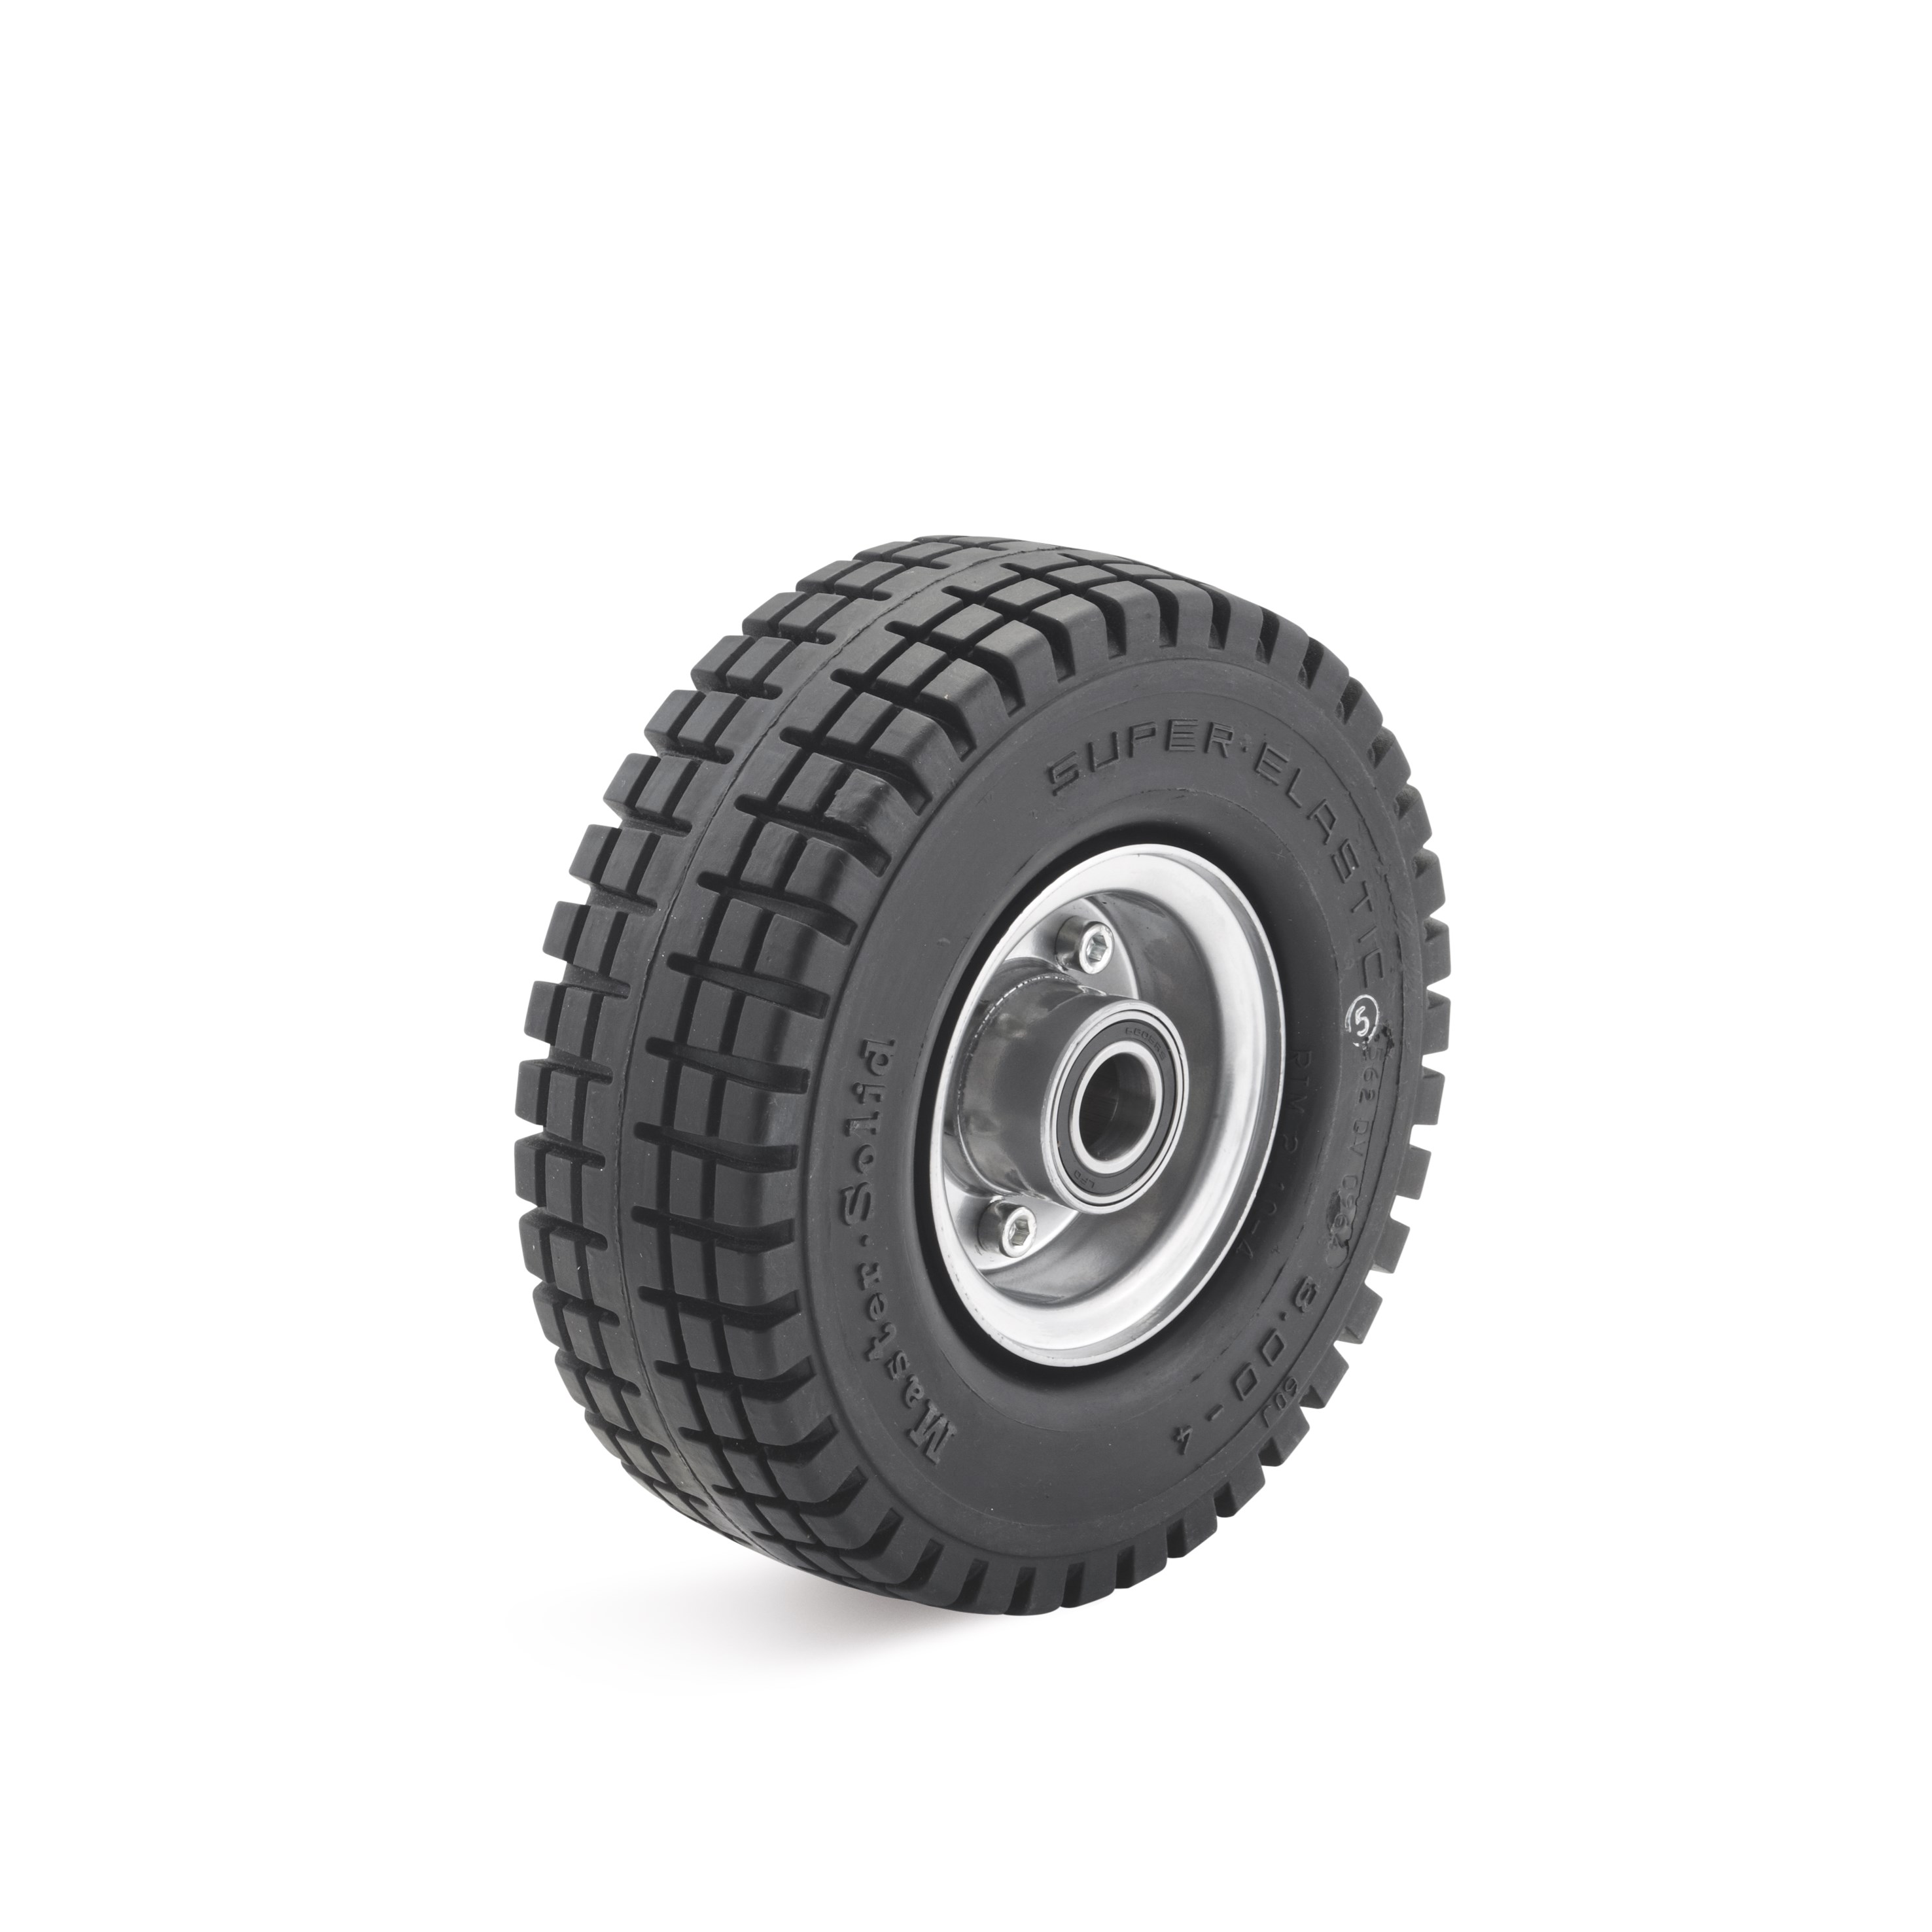 Super elastic wheel, on sheet steel care, 3-component tires